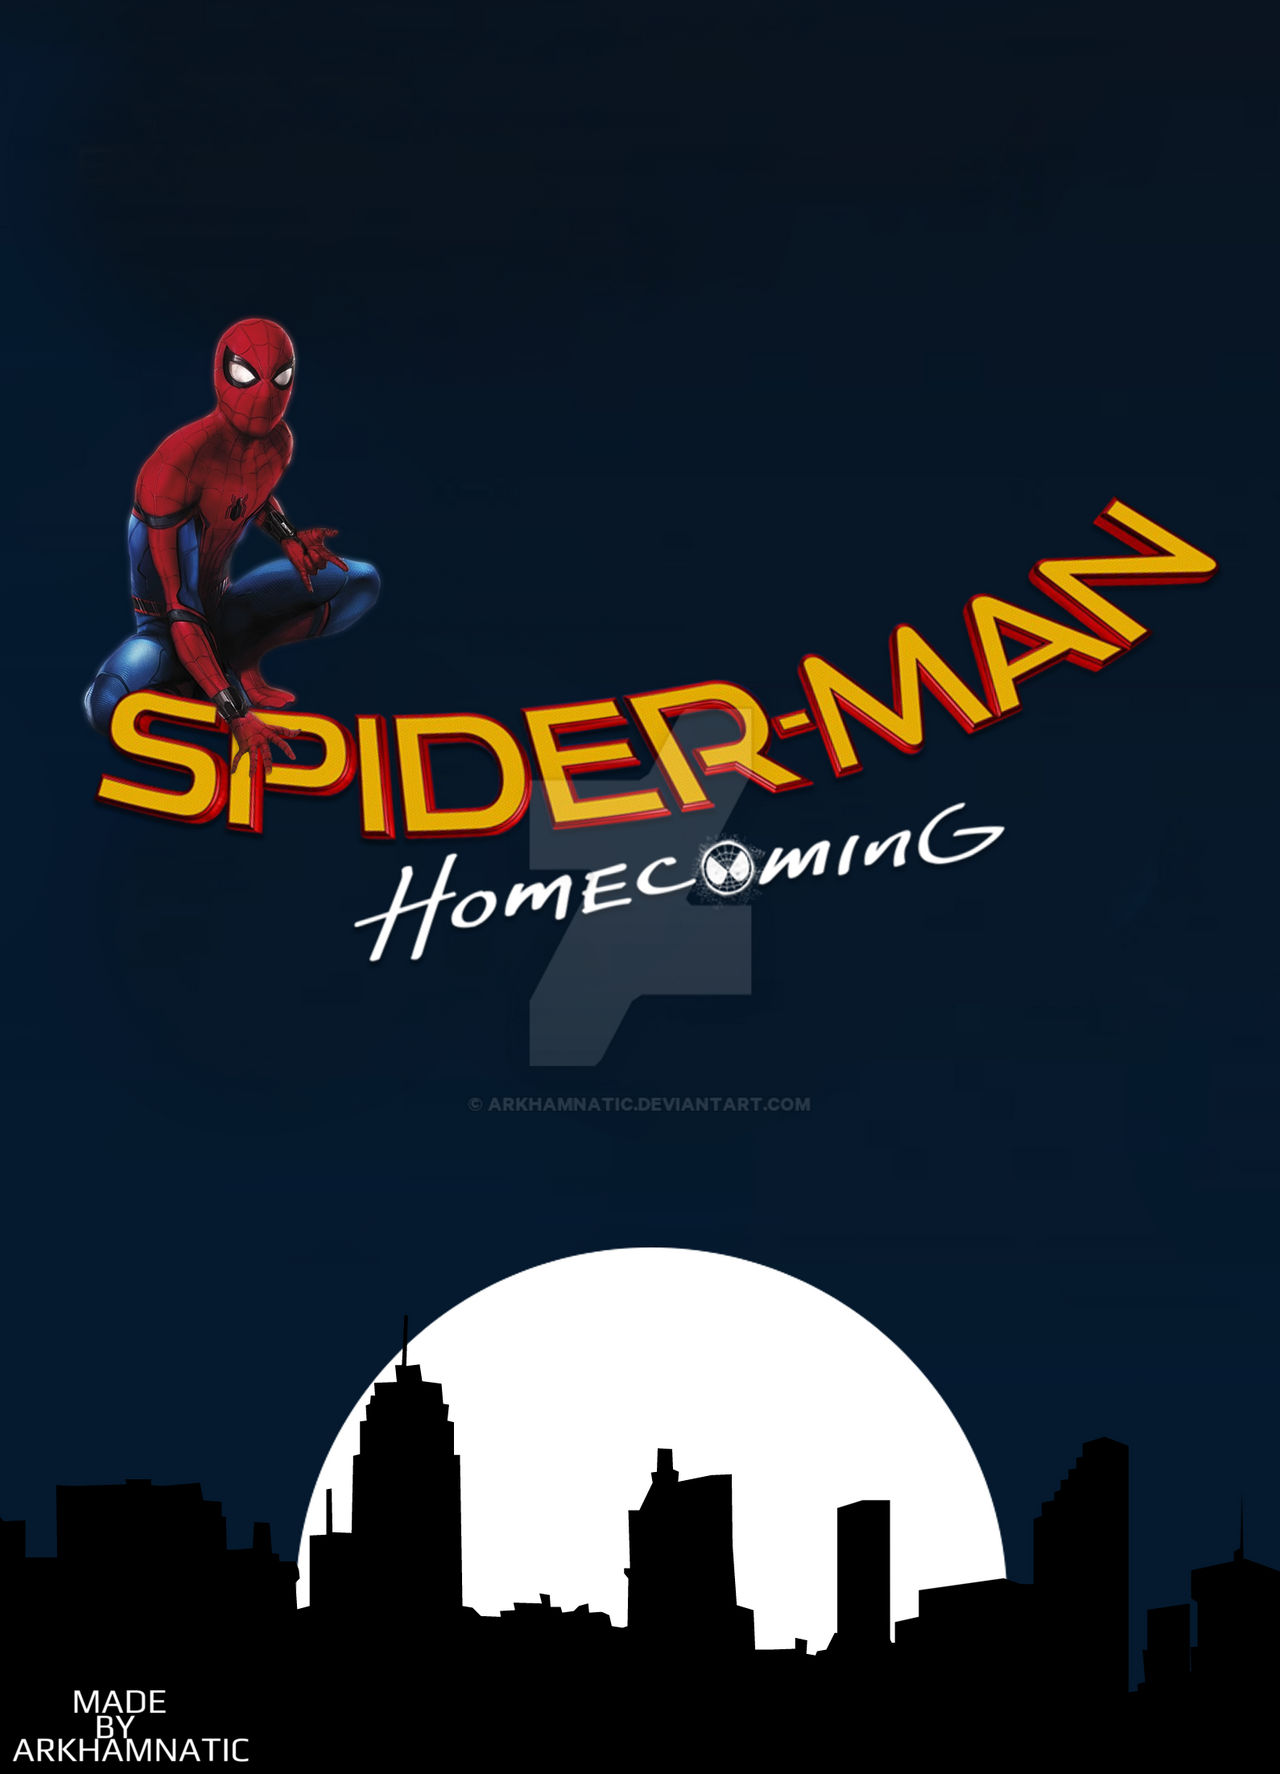 Poster Spiderman Homecoming - Arcadian